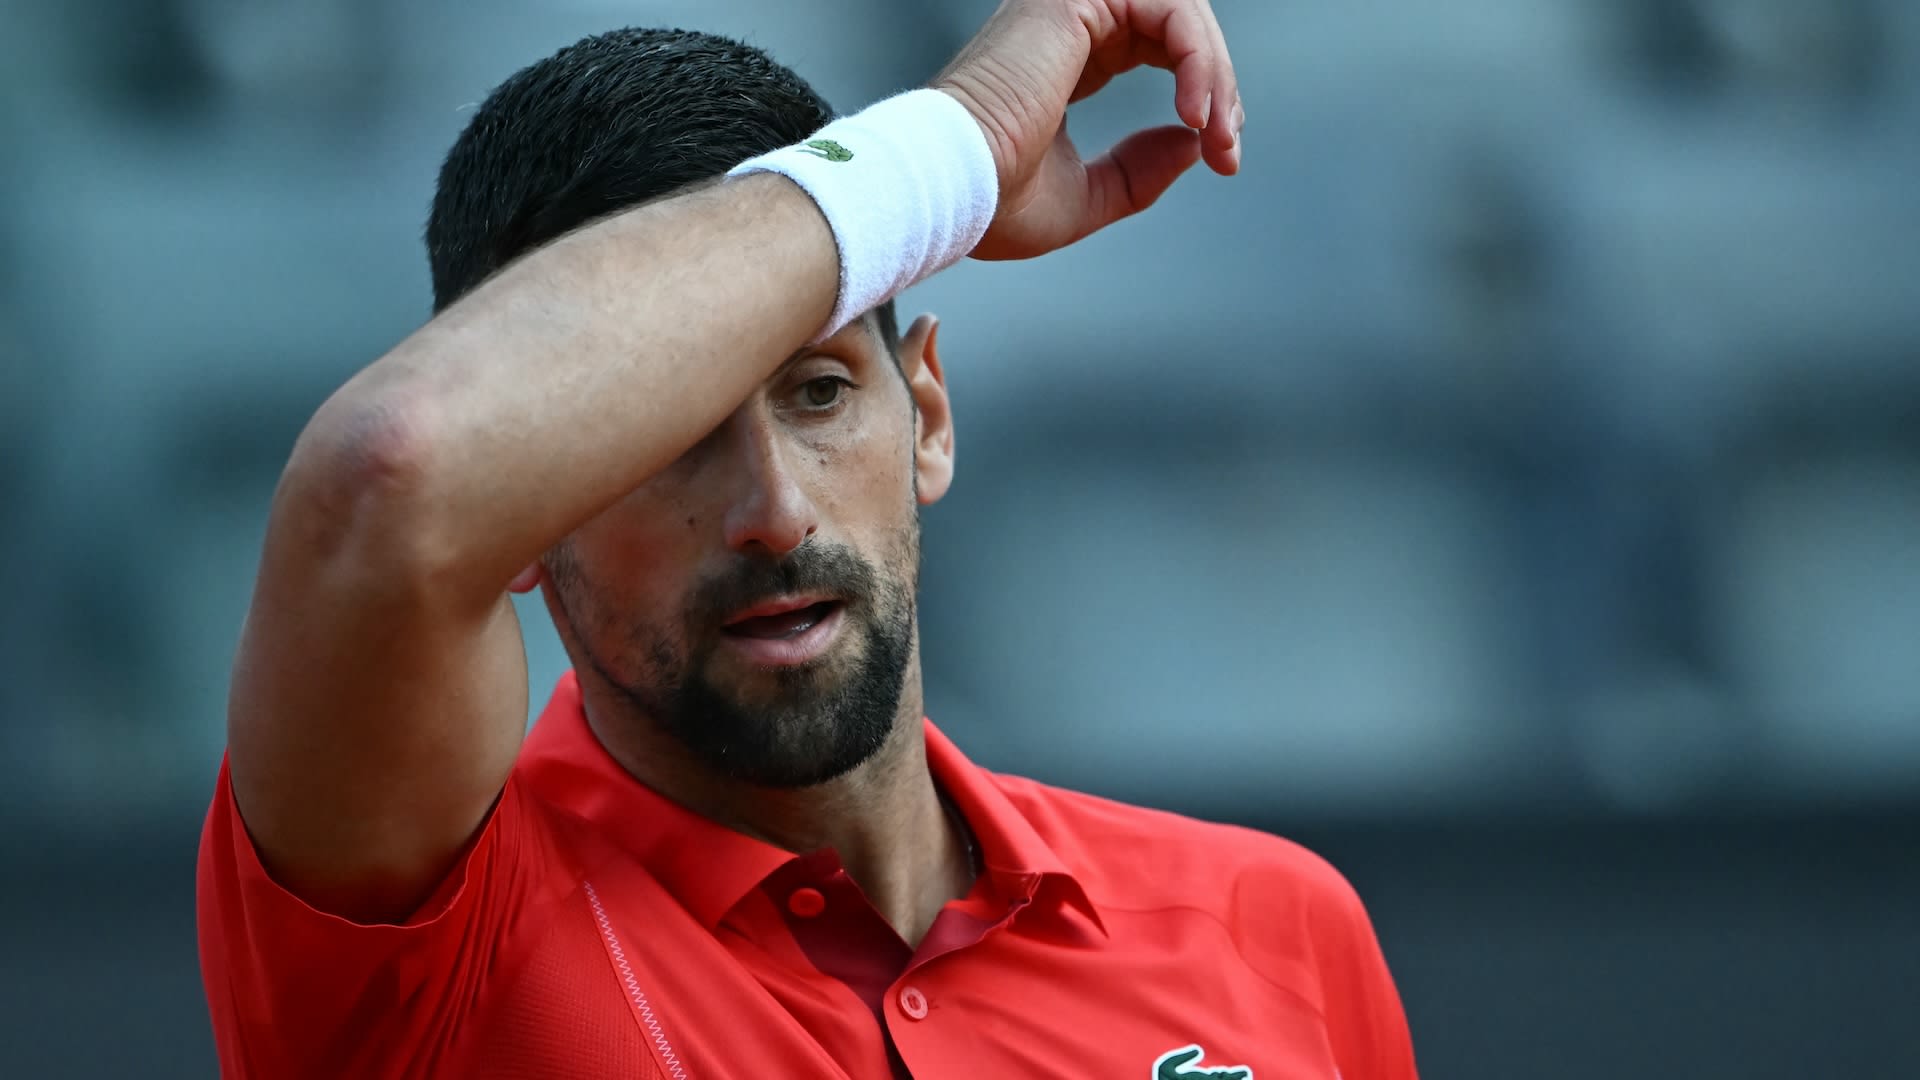 Novak Djokovic struck by water bottle after winning match in Rome | Tennis.com